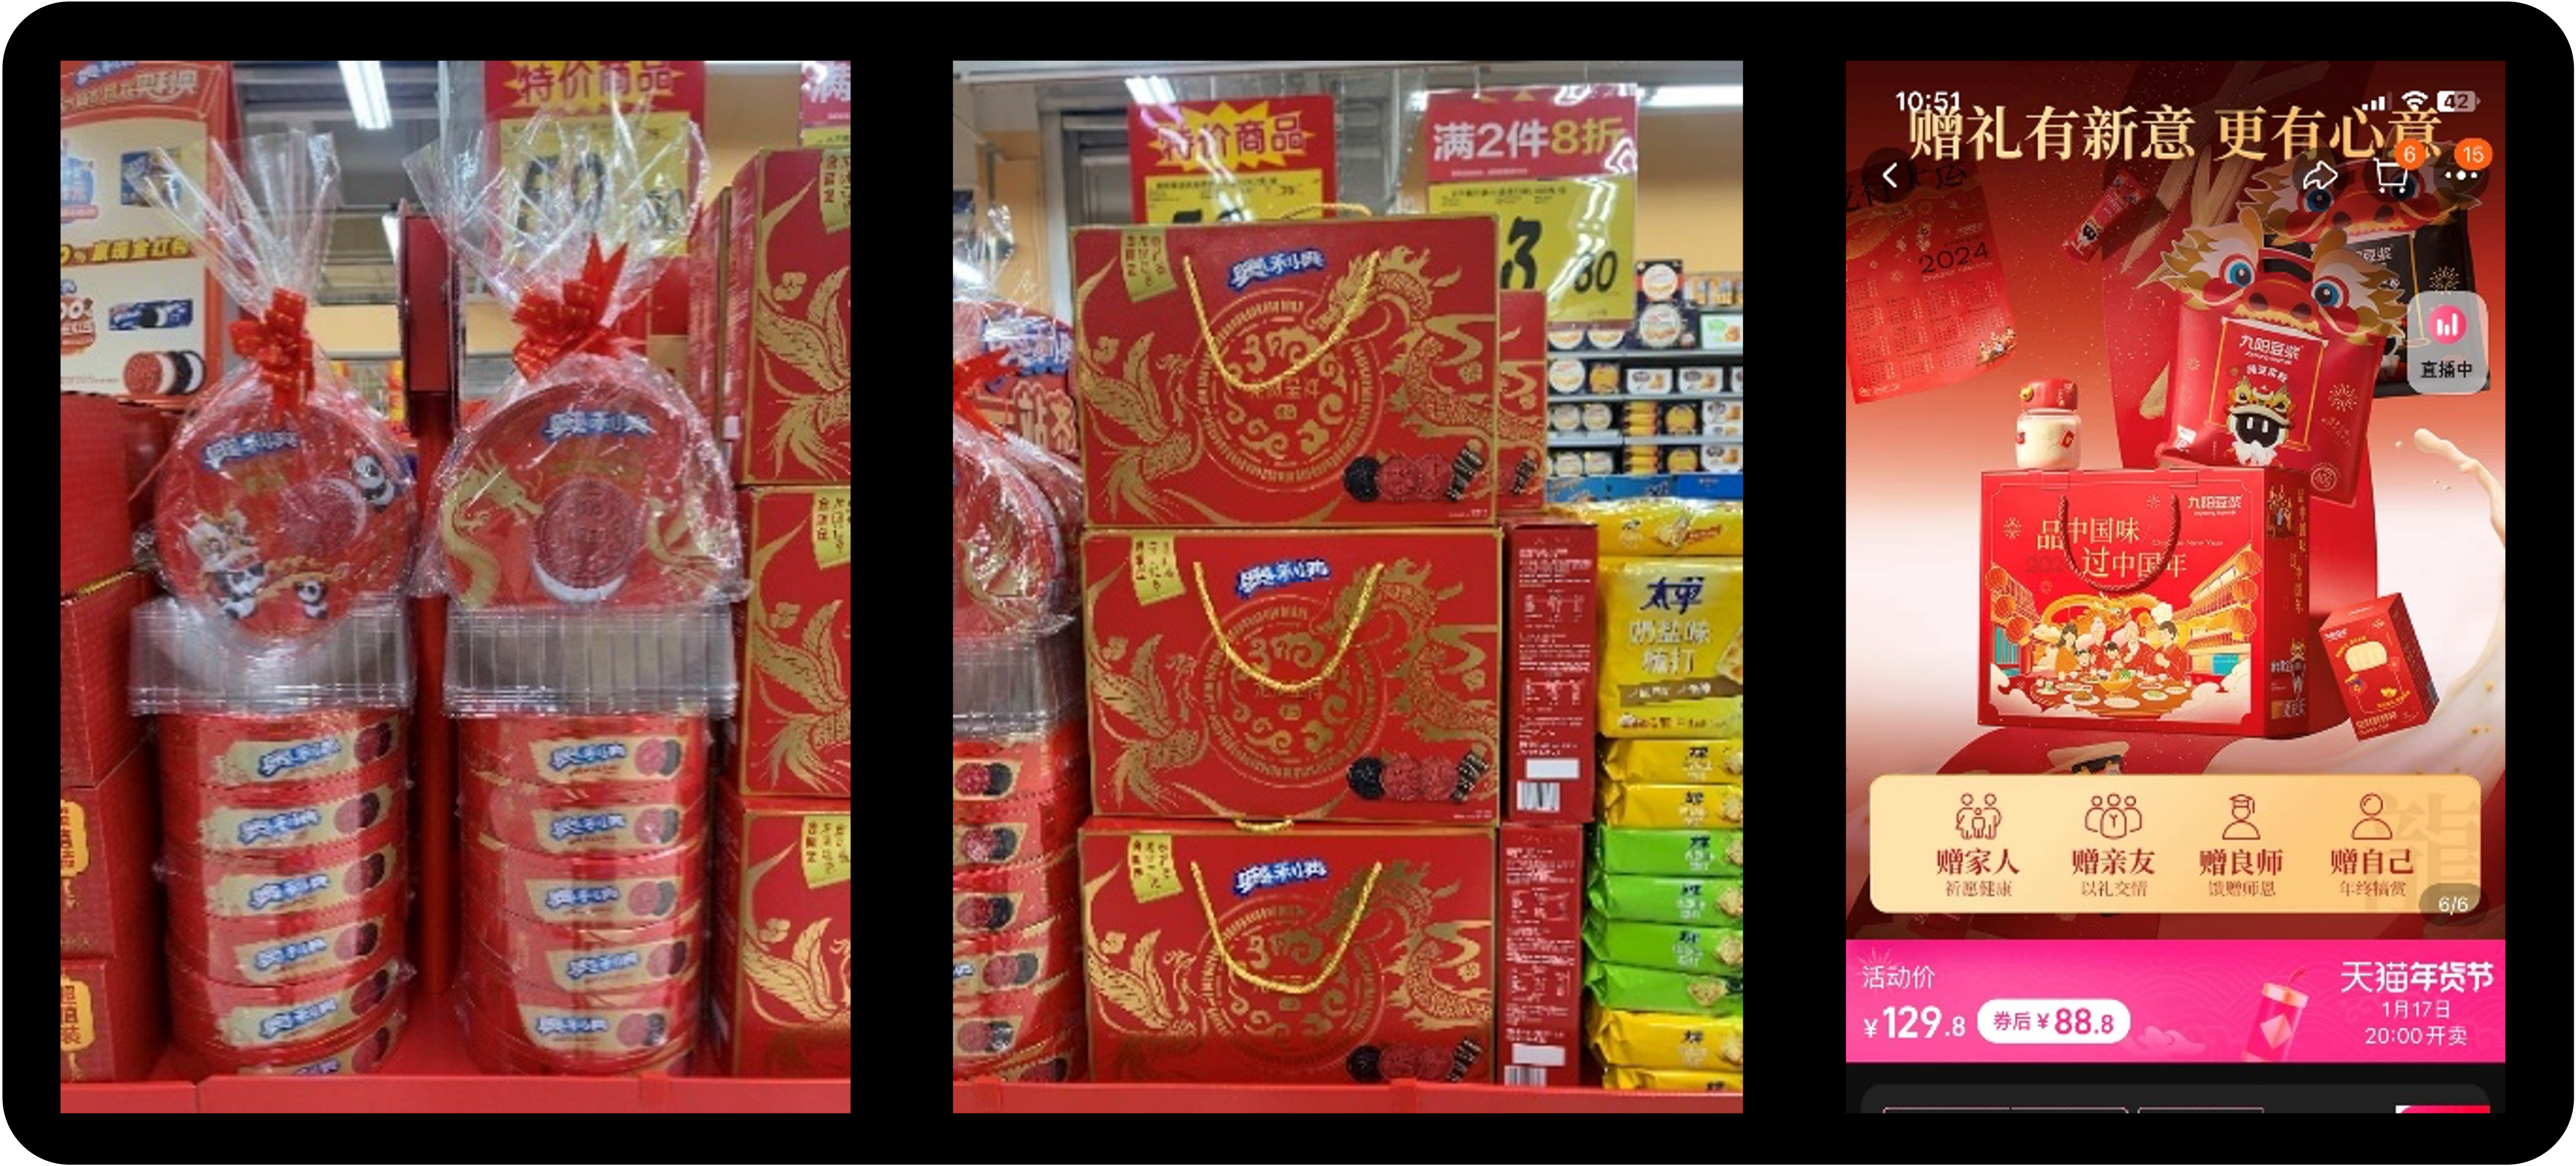 Oreo Chinese New Year Packaging Image